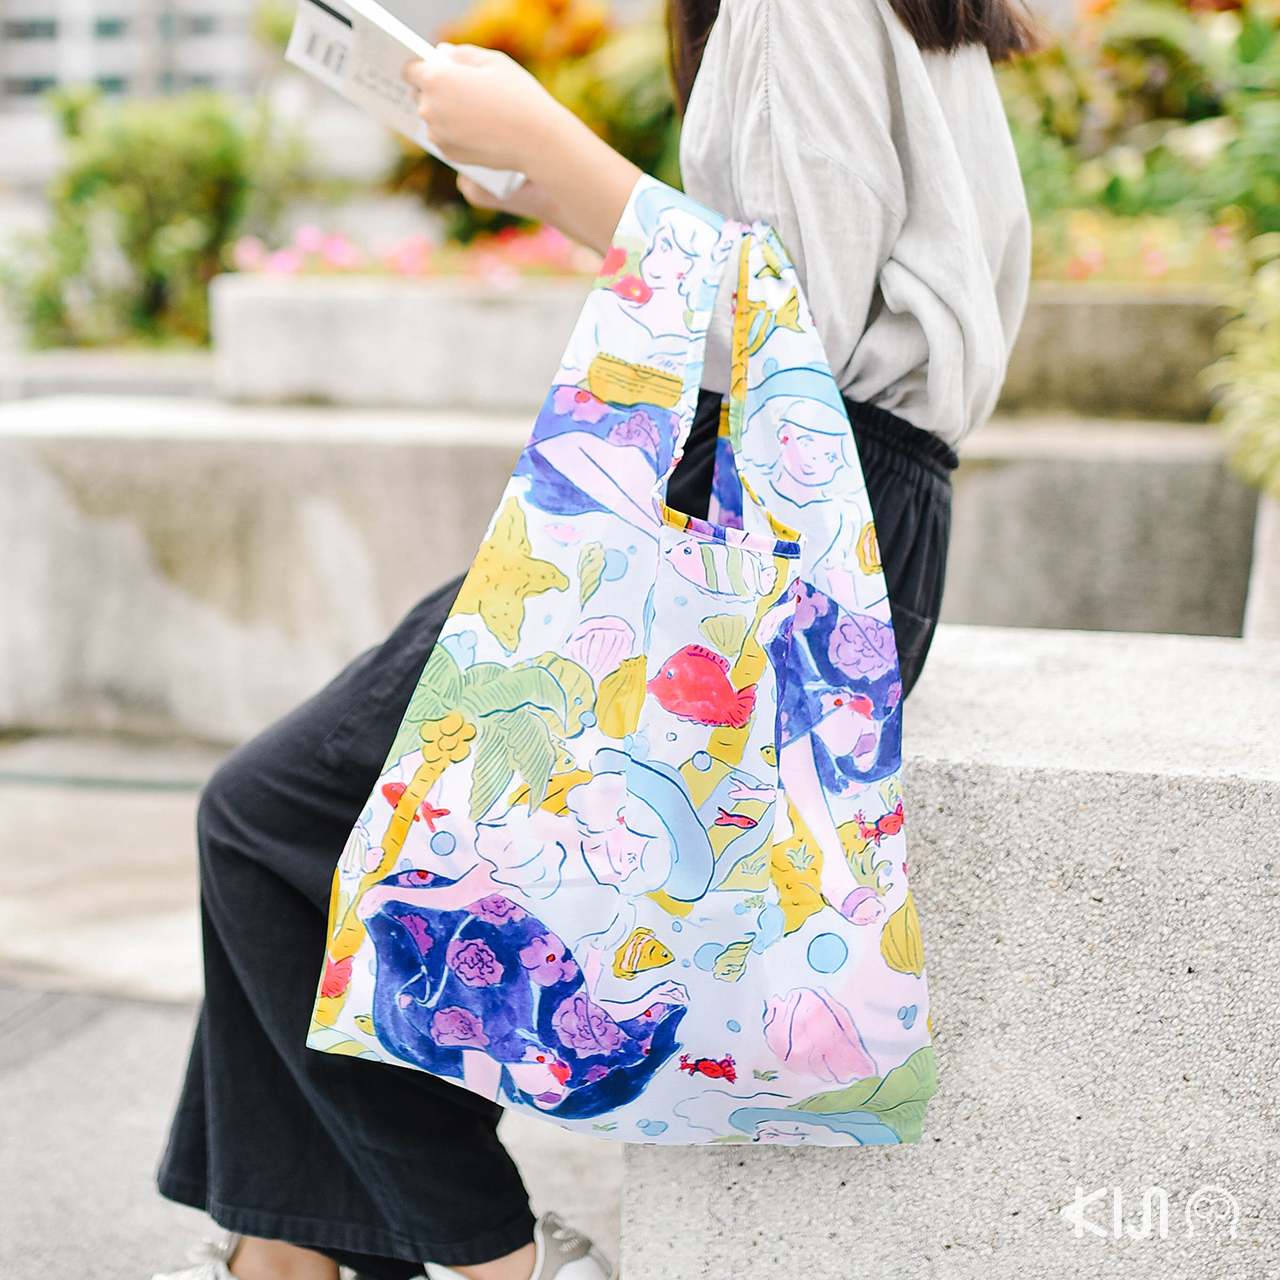 toklas Original Products ถุงผ้ารักษ์โลกวาดโดยนักวาดภาพประกอบชาวญี่ปุ่น (400 บาท)